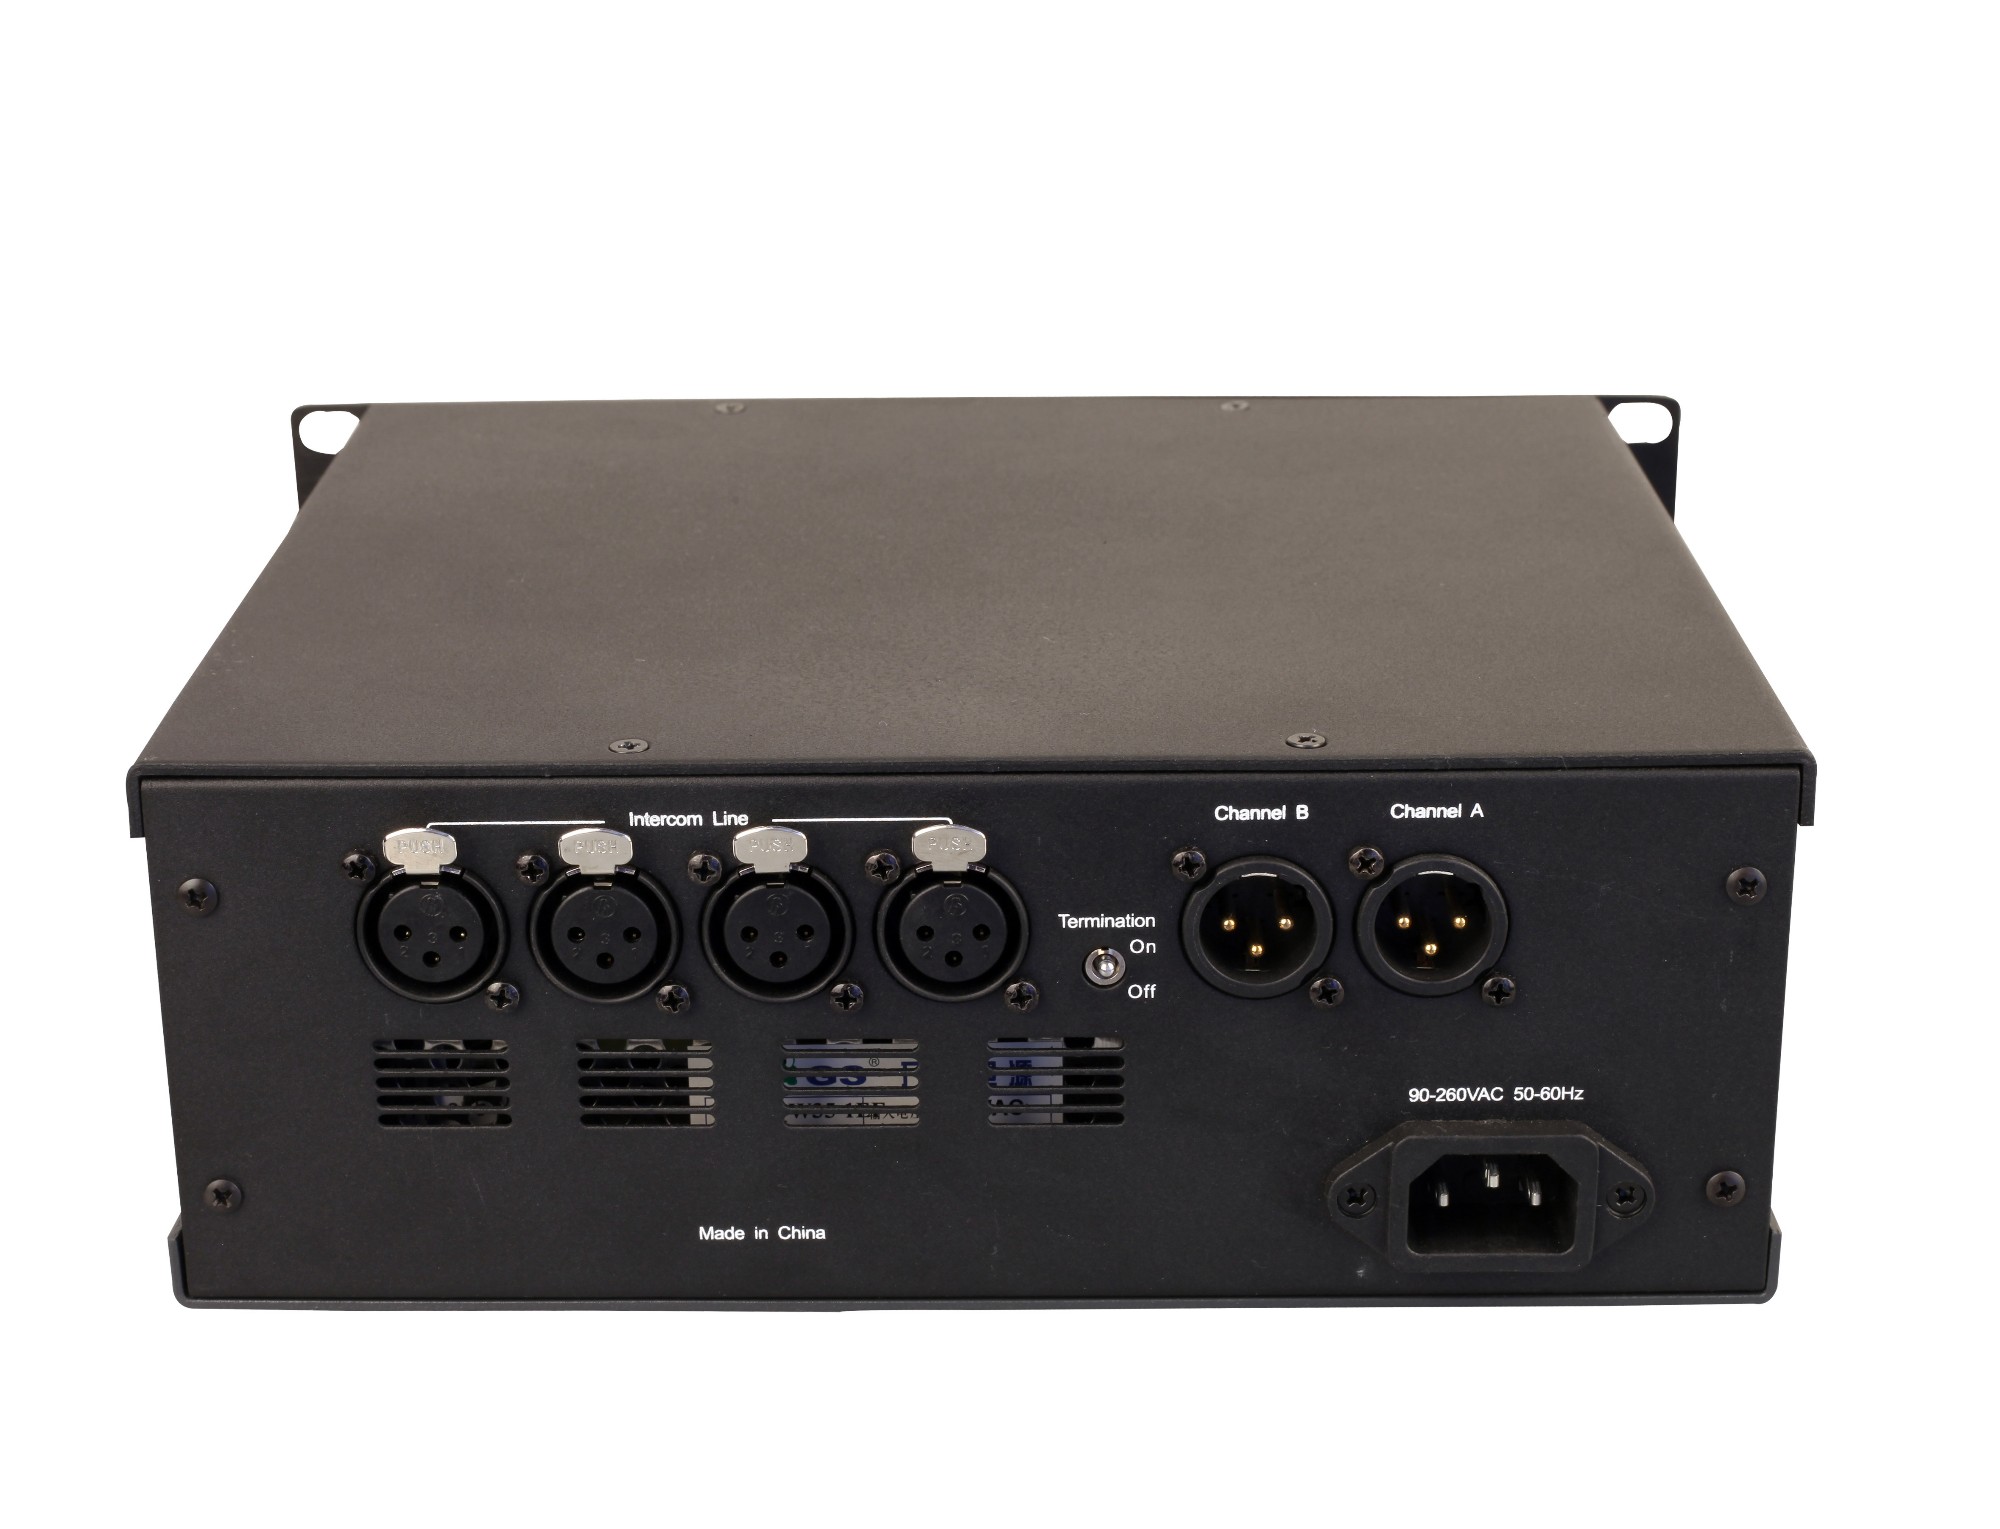 UTS-200 two channel speaker station for broadcast TV station theater studio room integration system